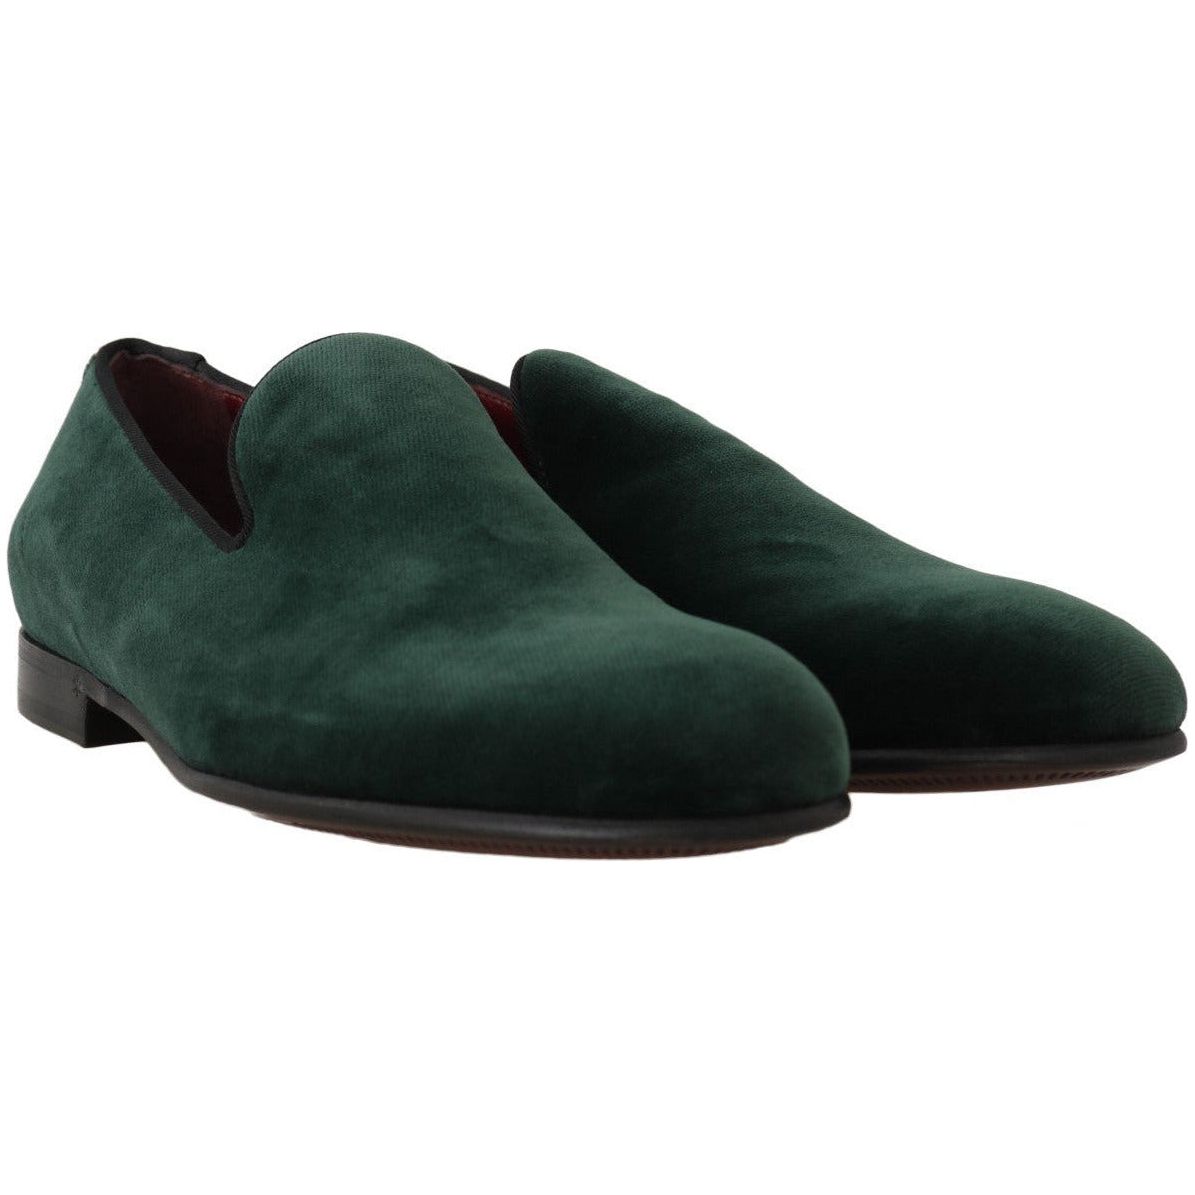 Dolce & Gabbana Elegant Green Suede Slip-On Loafers green-suede-leather-slippers-loafers 550450-green-suede-leather-slippers-loafers-3_a4f2c70c-1c07-4dae-bea0-b6d6277b9766.jpg